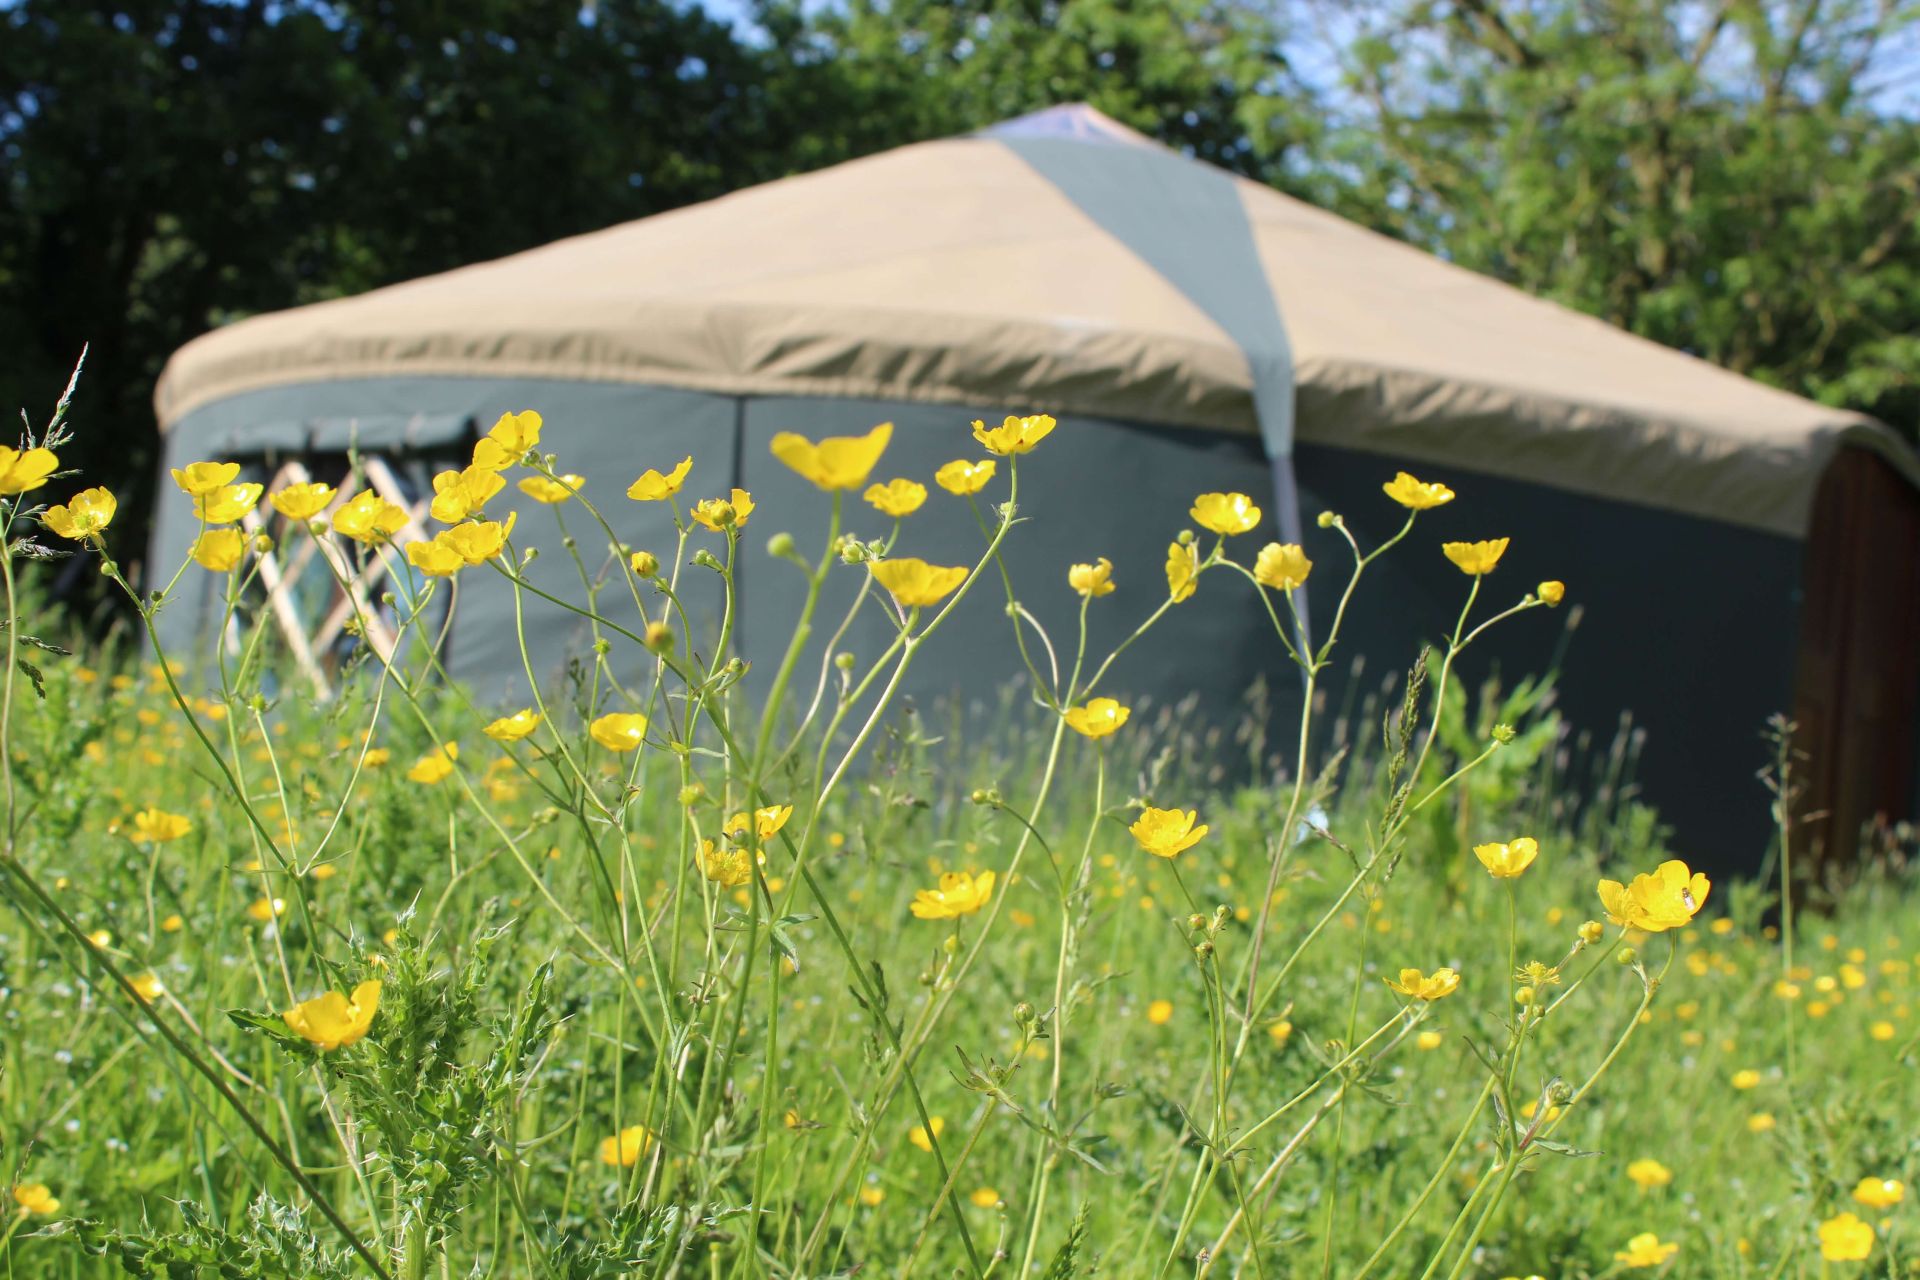 herbal medicine school yurt in field with wildflowers